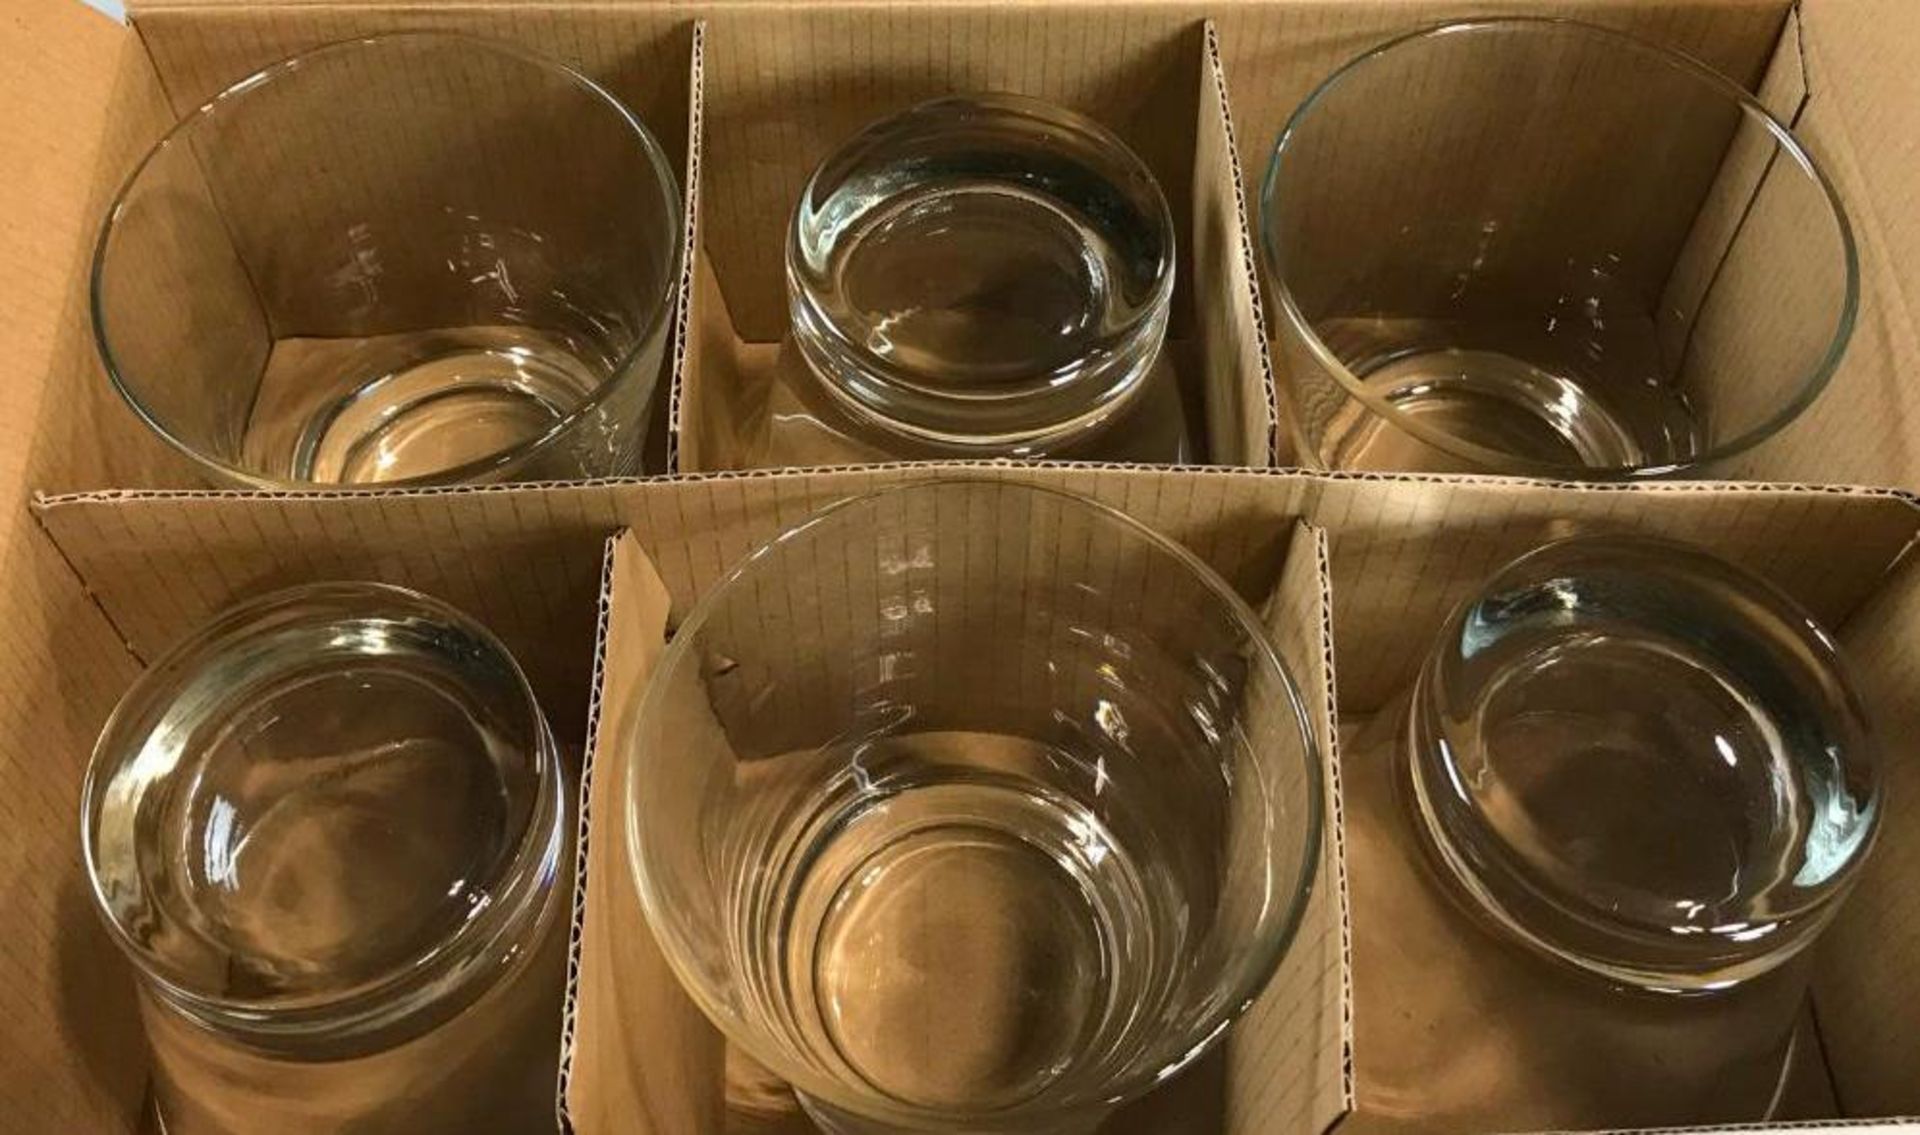 10.5 OZ SHETLAND OLD FASHIONED GLASSES, BOX OF 12 - ARCOROC 79741 - NEW - Image 5 of 6